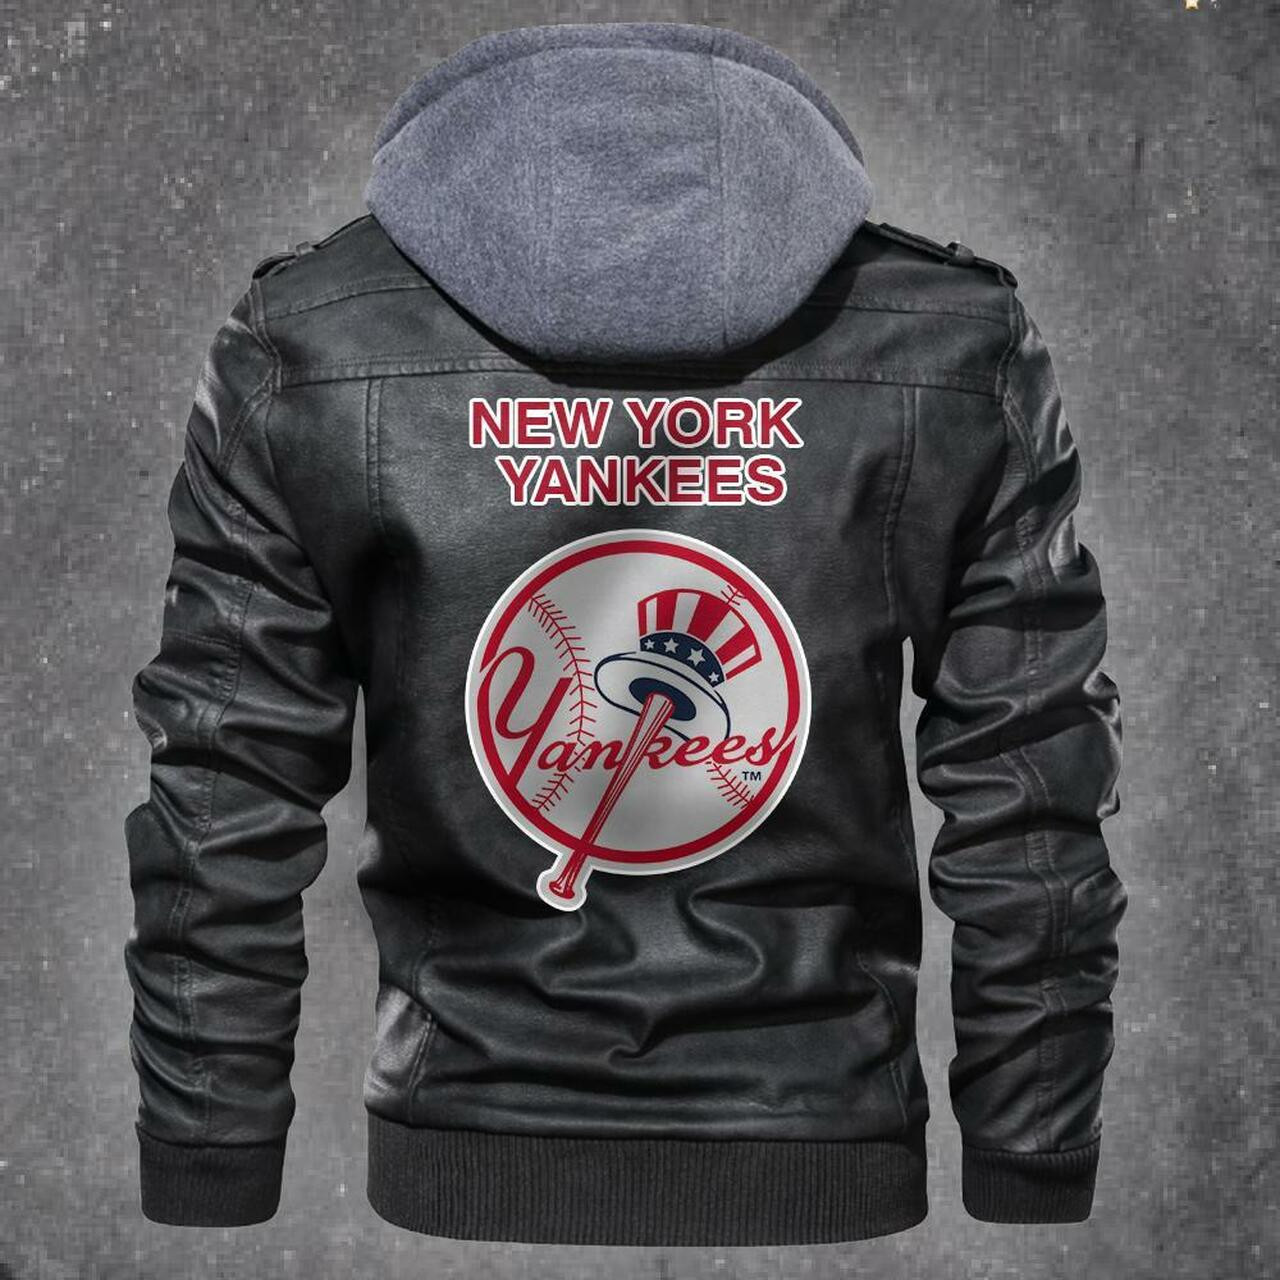 Top leather jacket Sells Best on Techcomshop 159